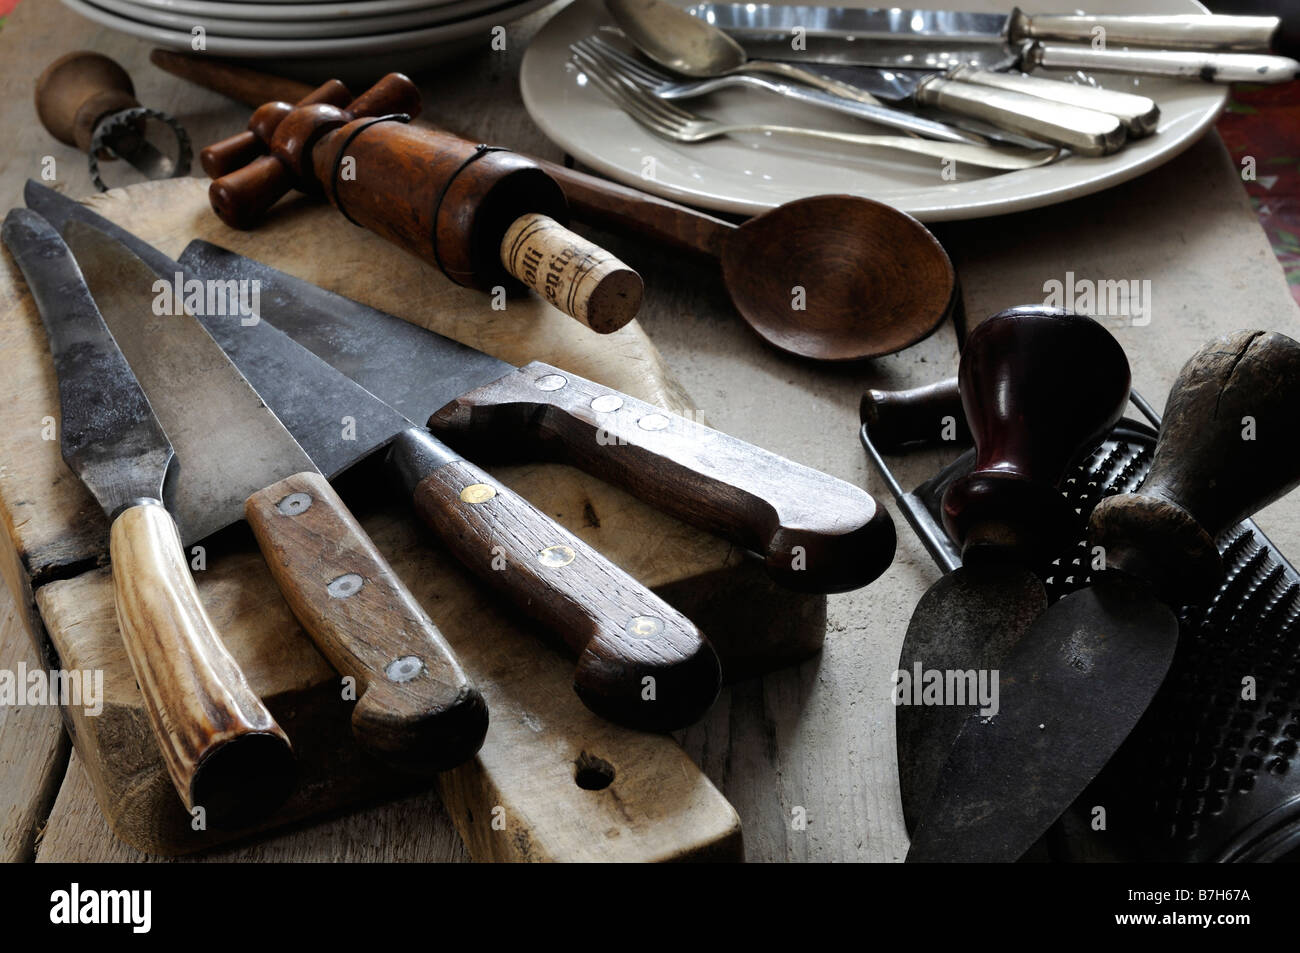 https://c8.alamy.com/comp/B7H67A/a-selection-of-antique-italian-cooking-utensils-B7H67A.jpg